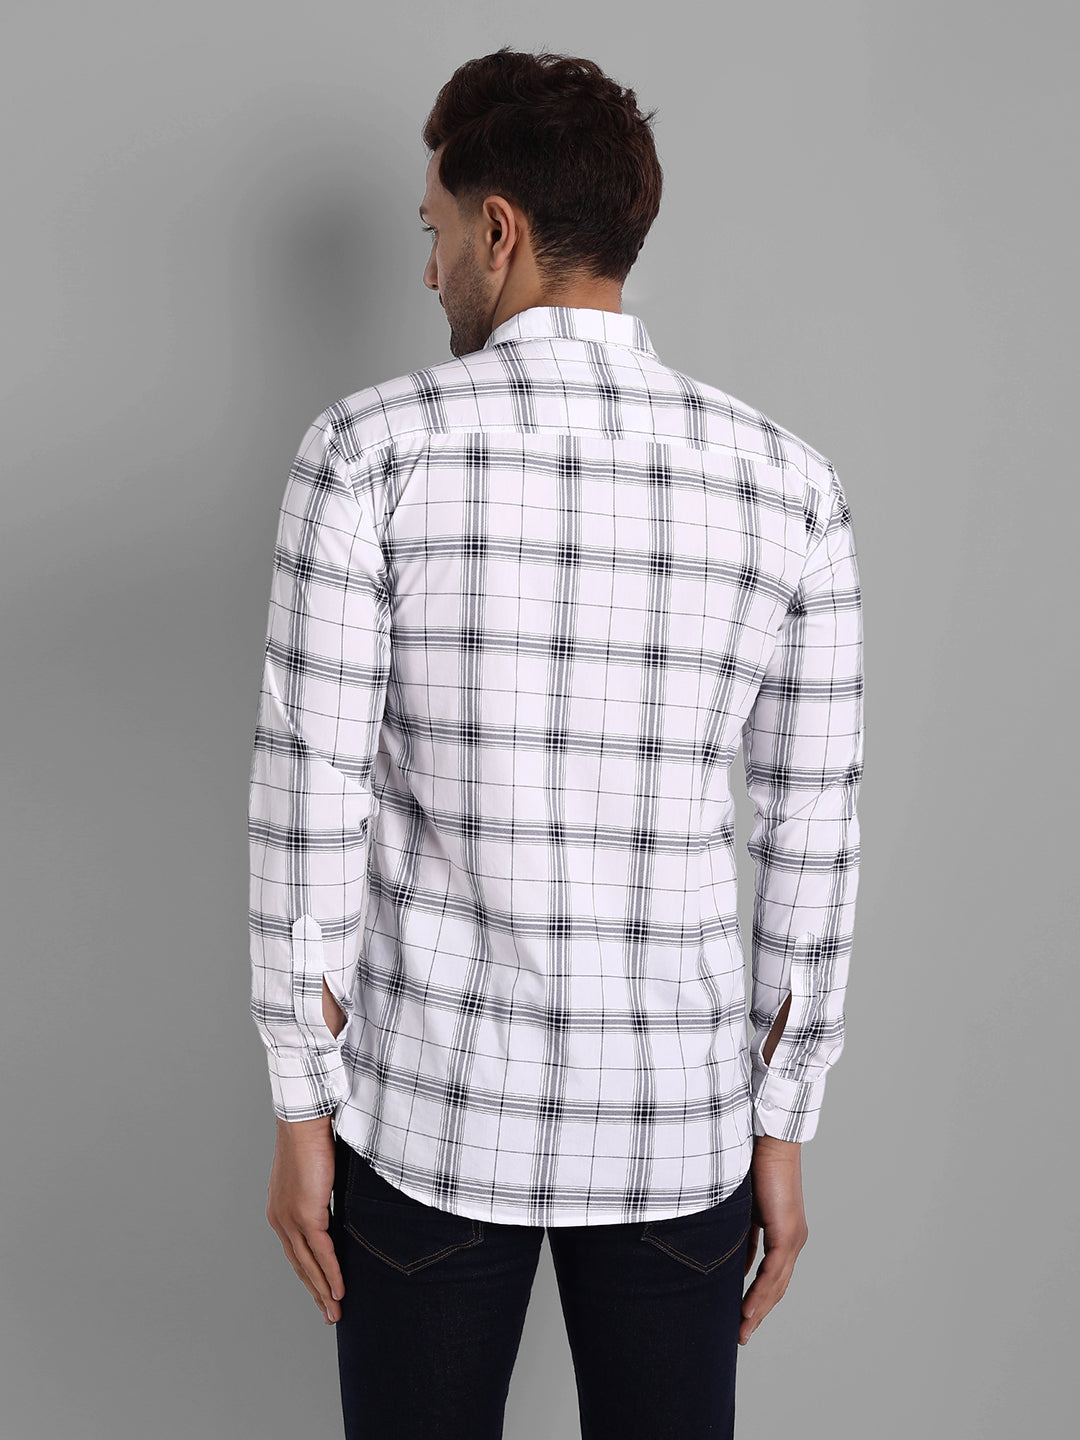 Classic Checkmate Pure Cotton Checkered Shirt - White